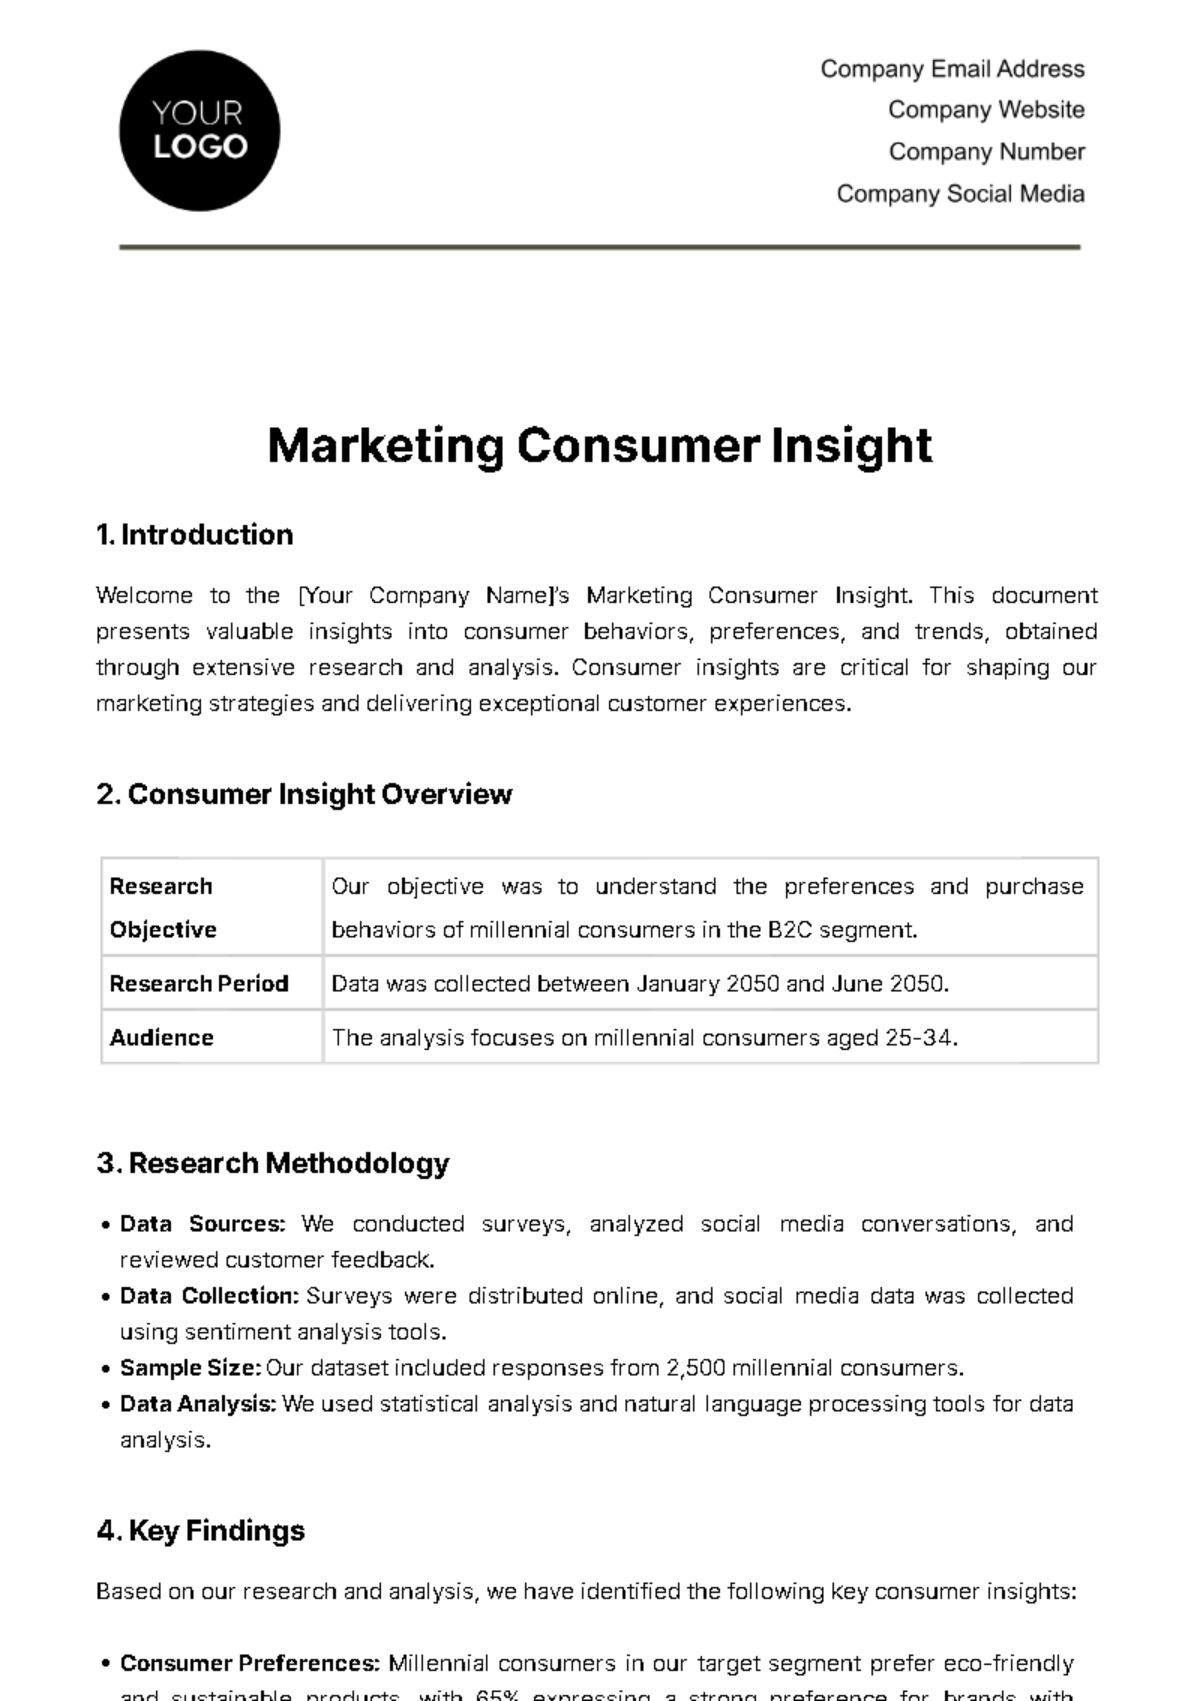 Marketing Consumer Insight Template